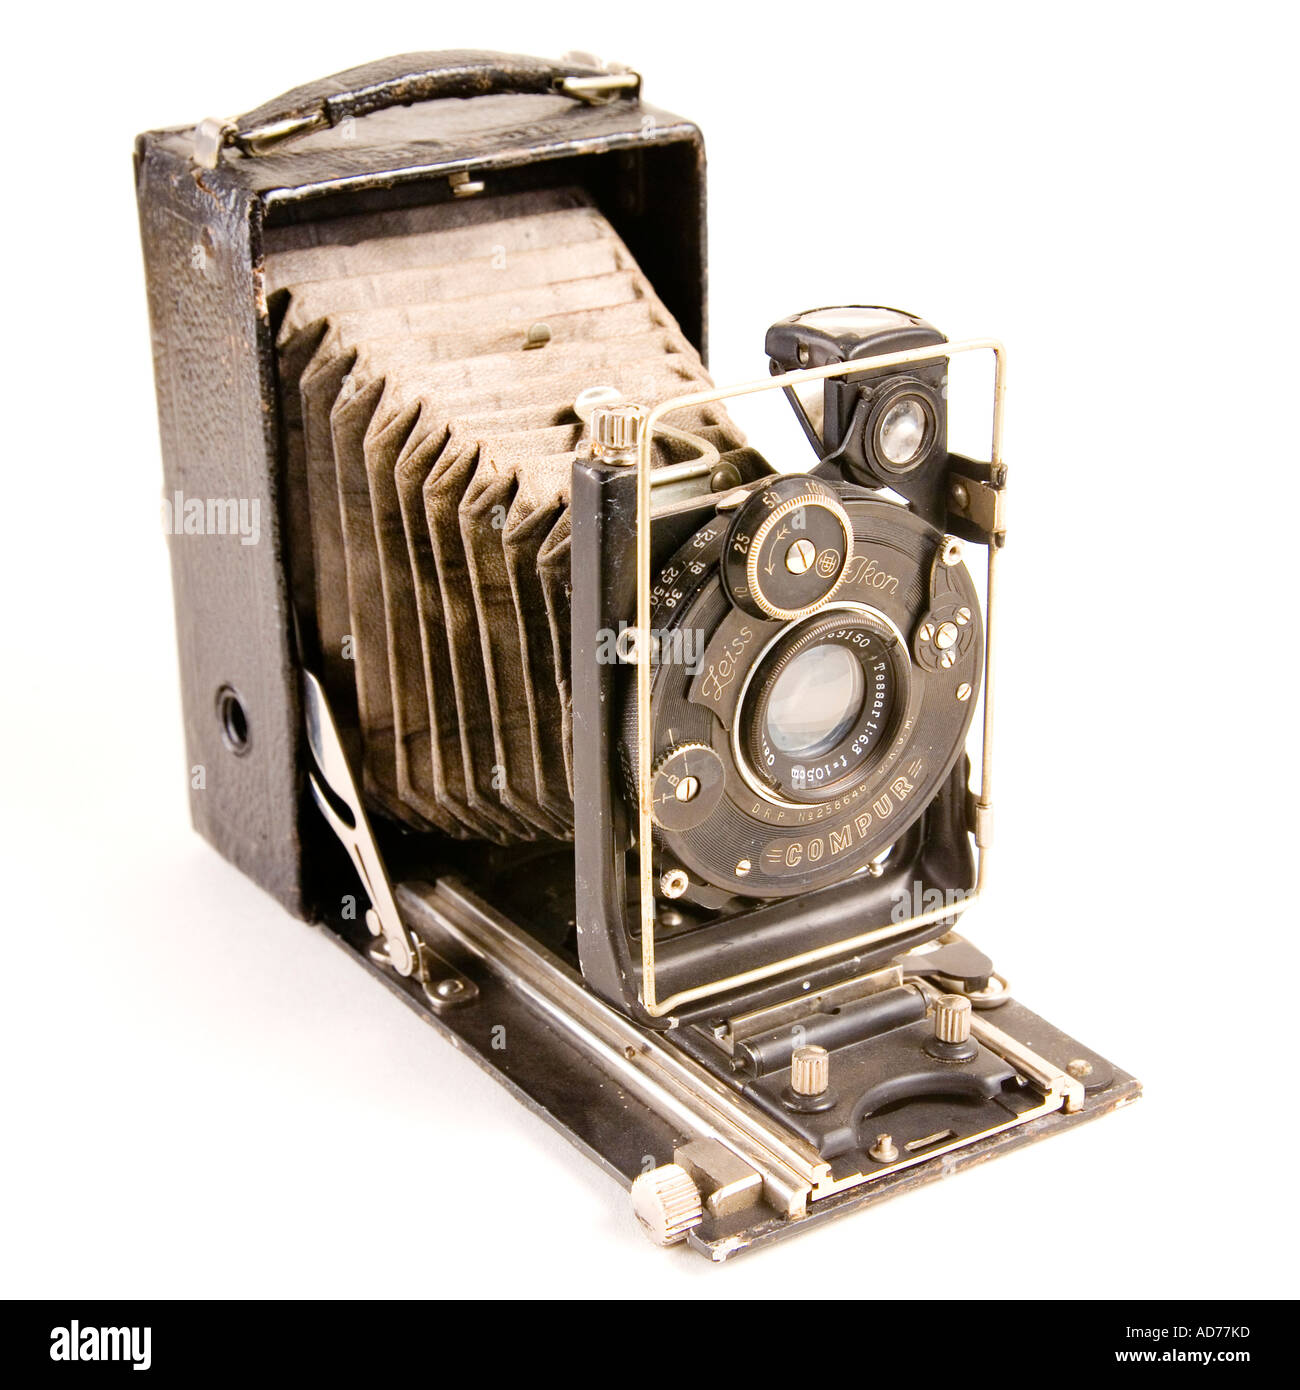 Zeiss ikon kamera -Fotos und -Bildmaterial in hoher Auflösung – Alamy